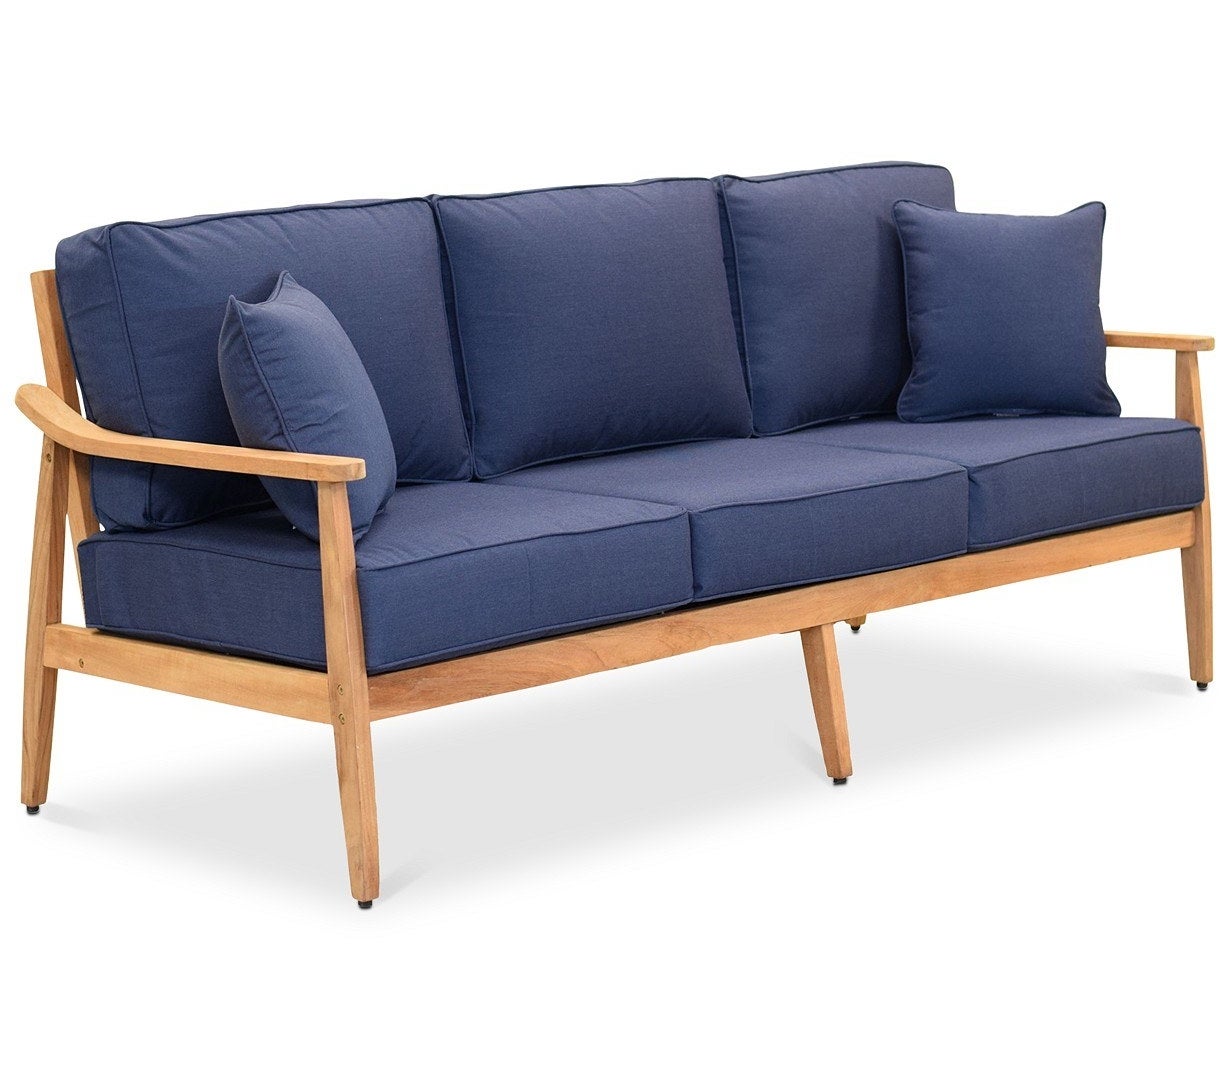 wood sofa frame with plush dark blue cushions and pillows